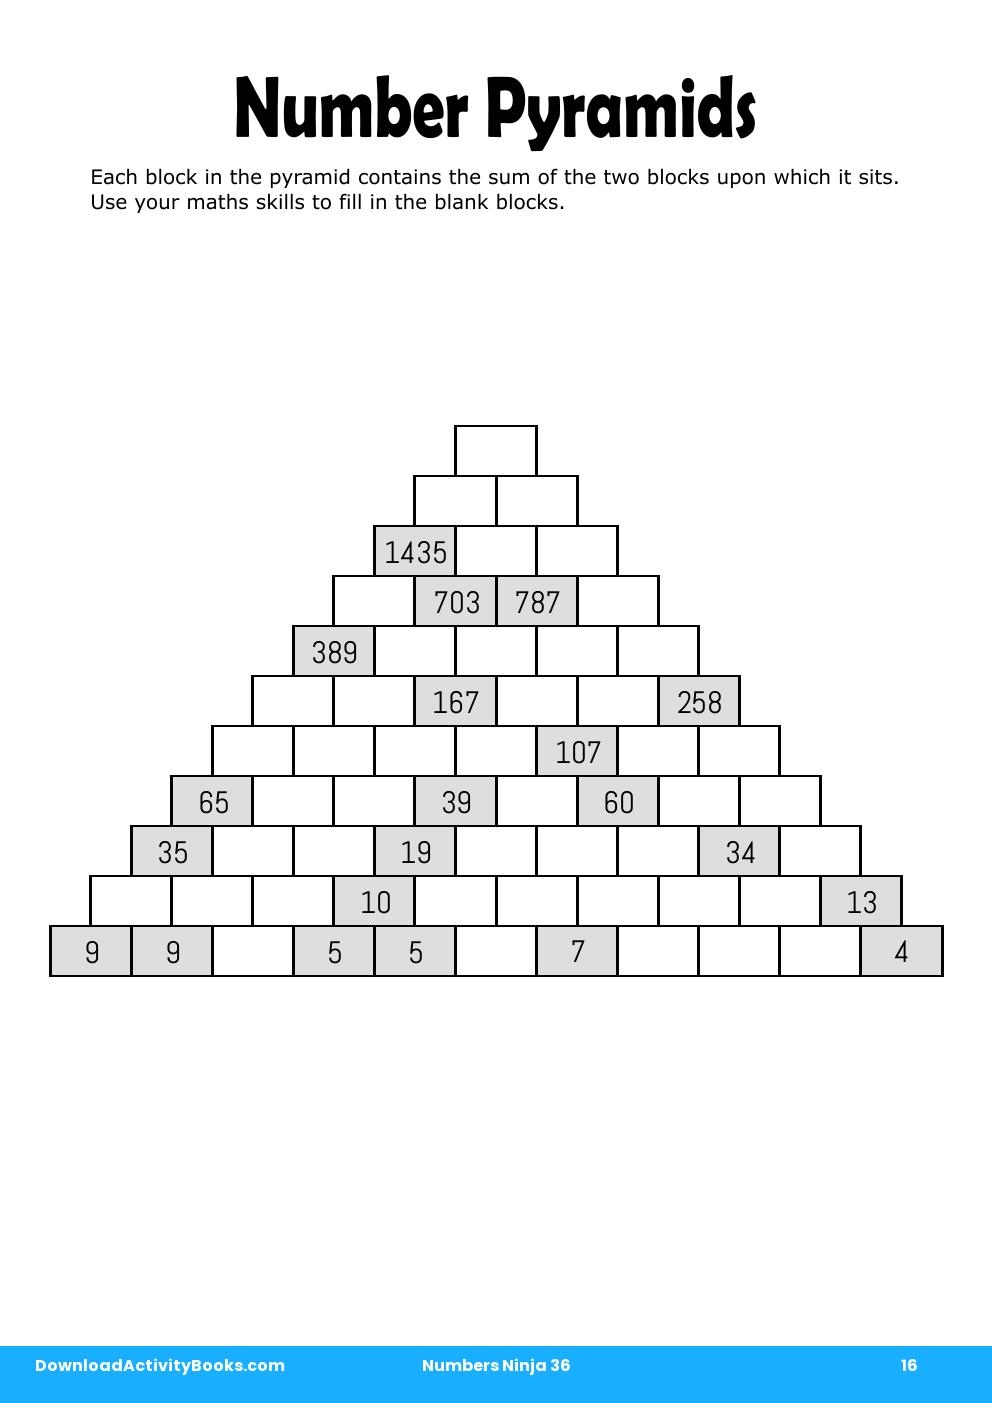 Number Pyramids in Numbers Ninja 36